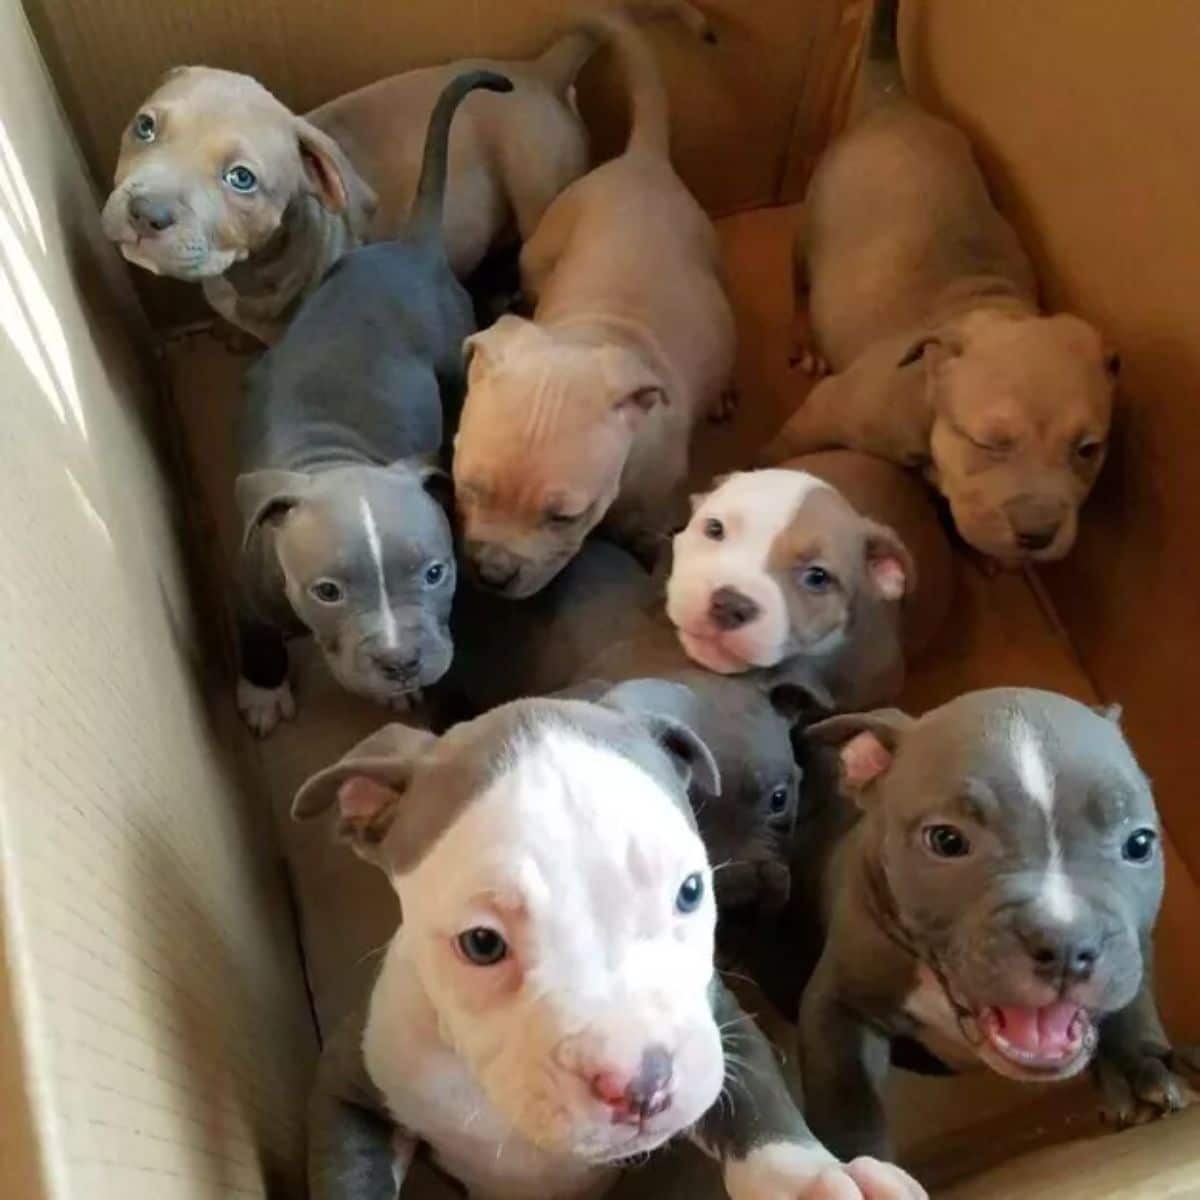 7 pitbull puppies in a box